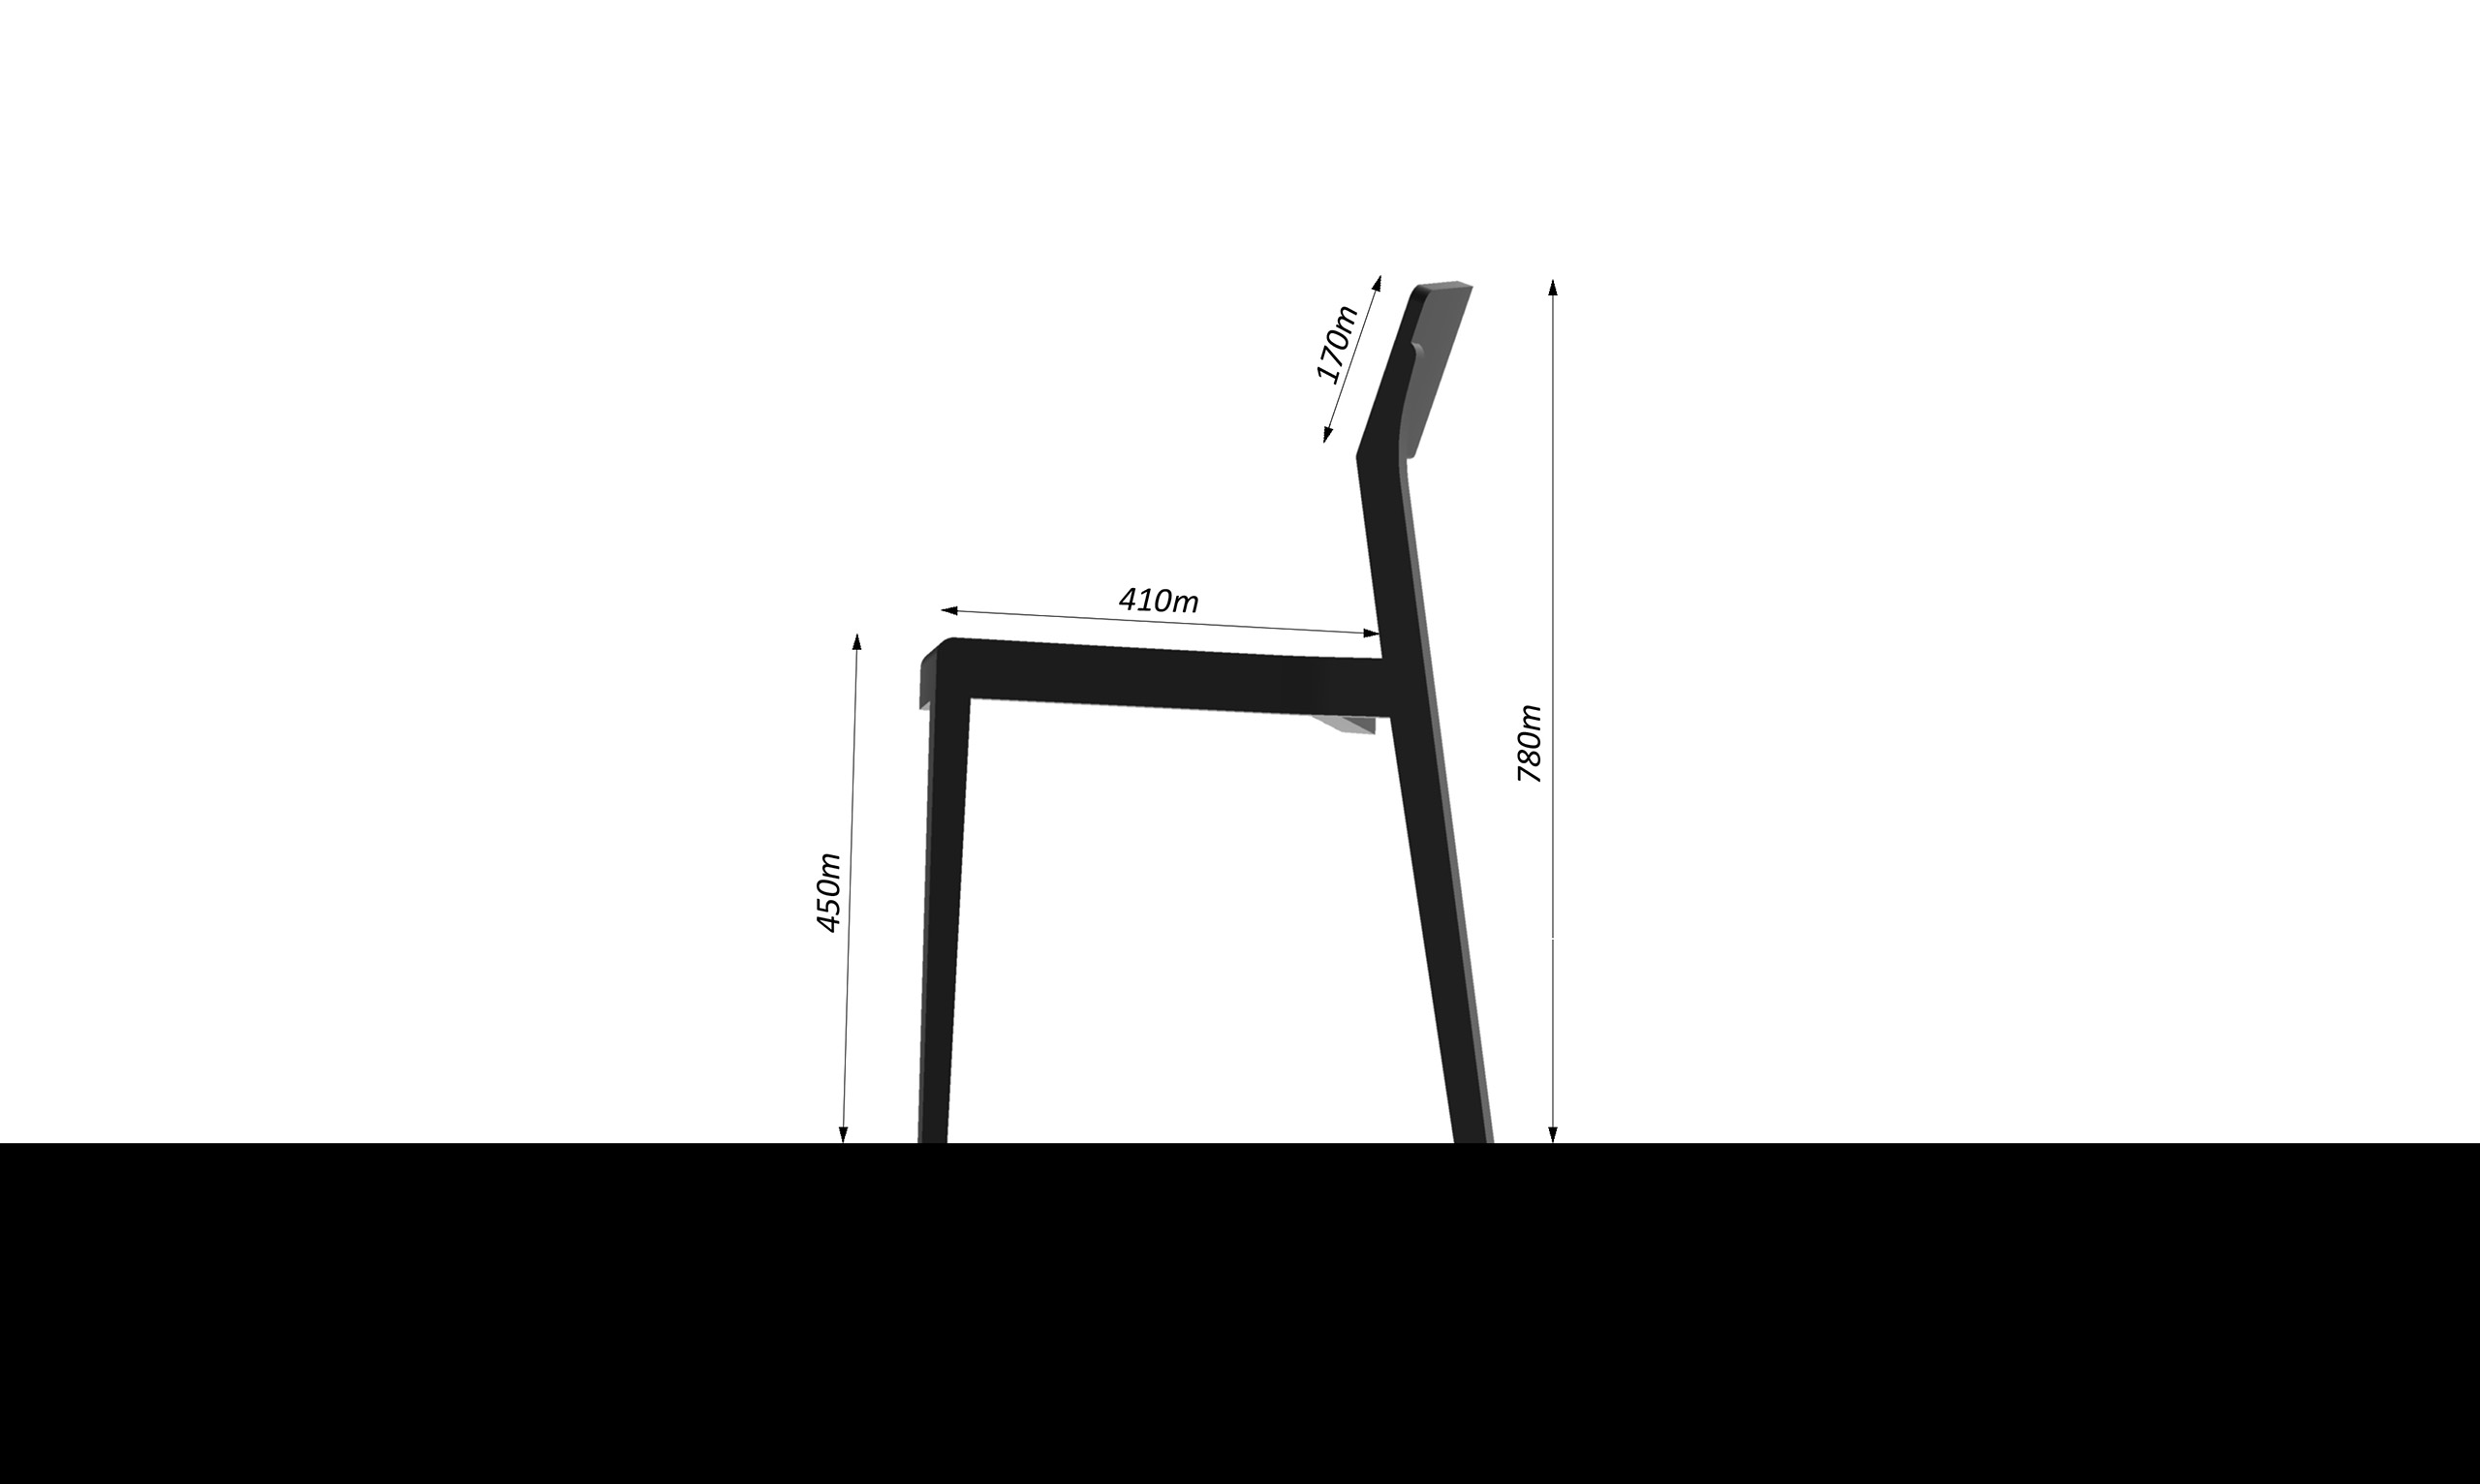 Charity Chair measurements